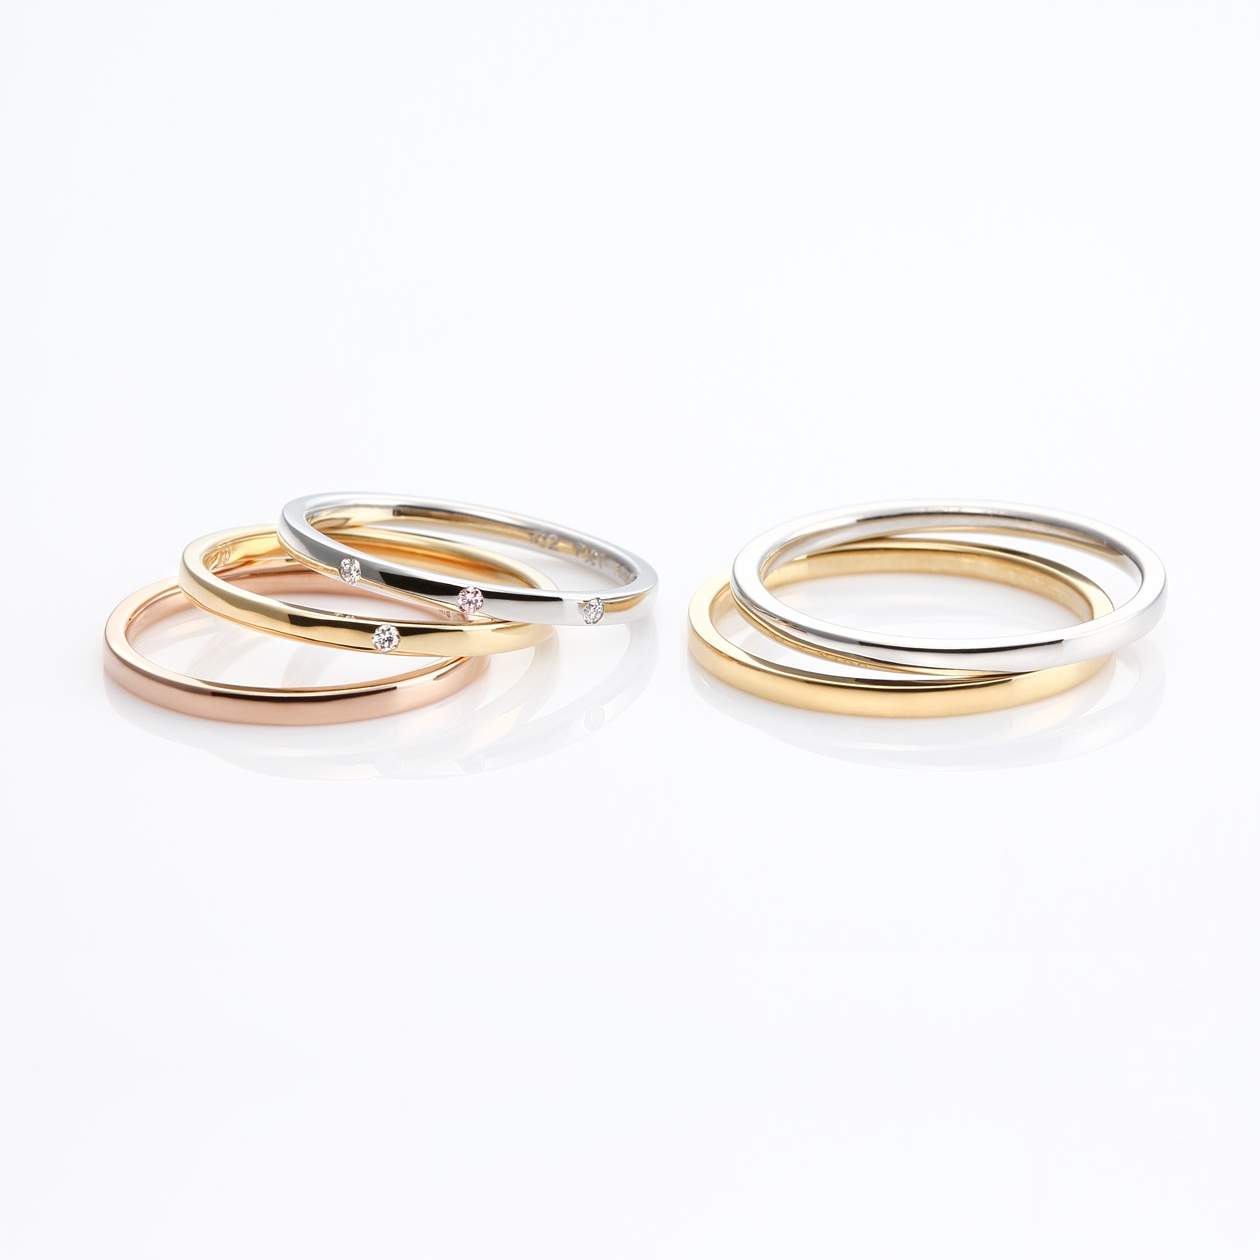 Layered Marriage Ring 2連と3連 のマリッジリング オーダーメード マリッジリング 結婚指輪 婚約指輪の ヤマジスノウ